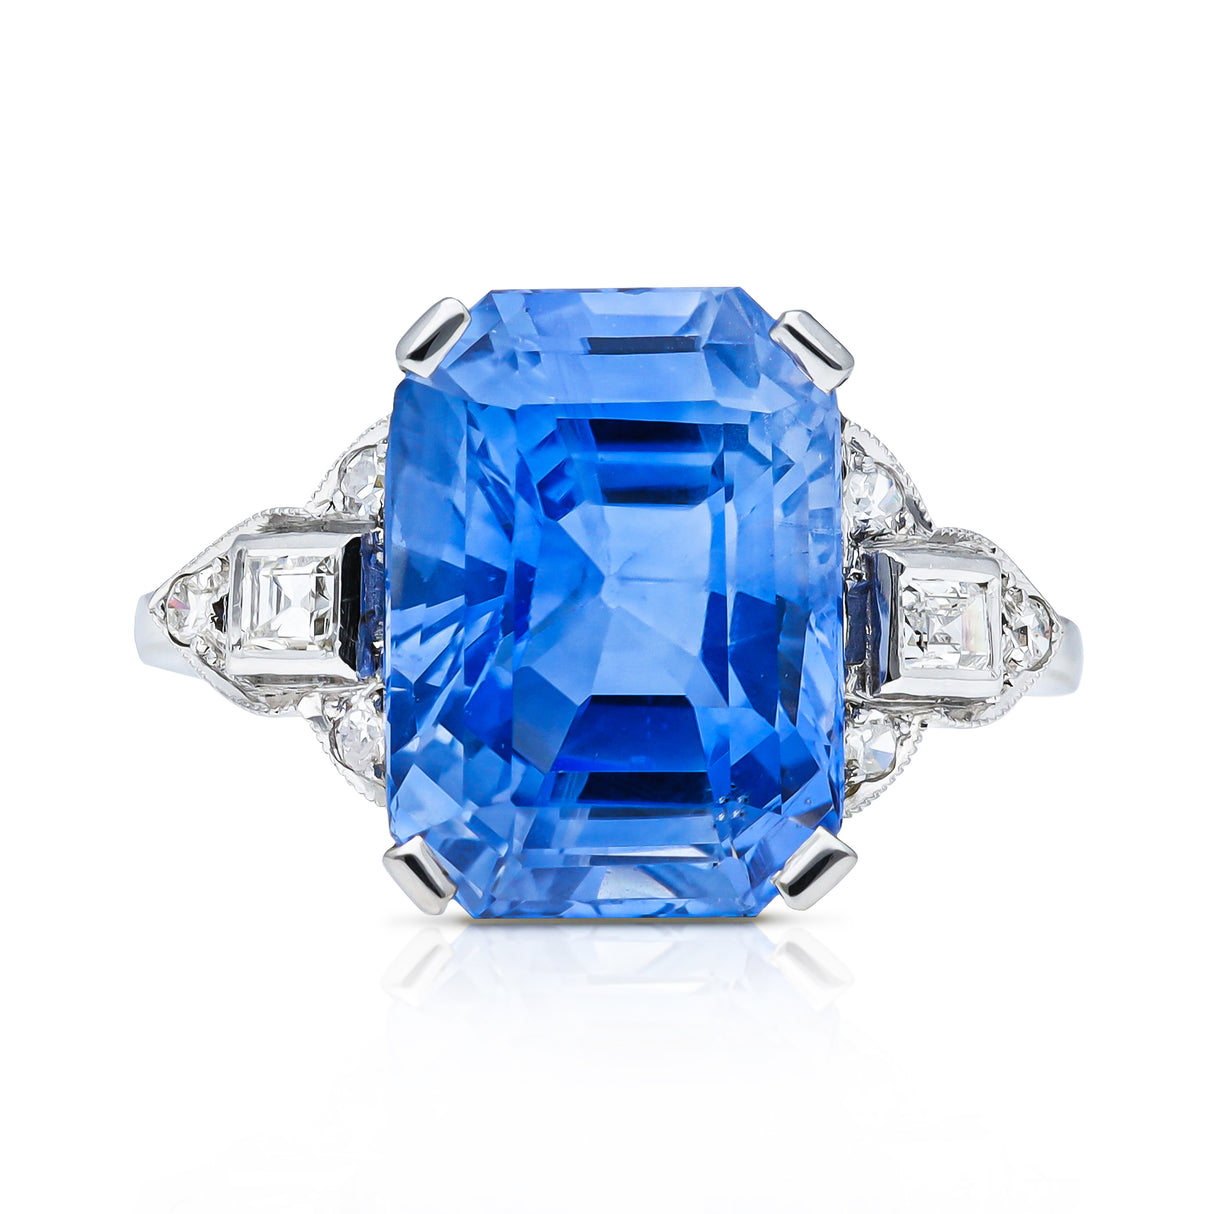 Vintage, Art Deco 8ct Sri Lankan Sapphire and Diamond Ring, Platinum